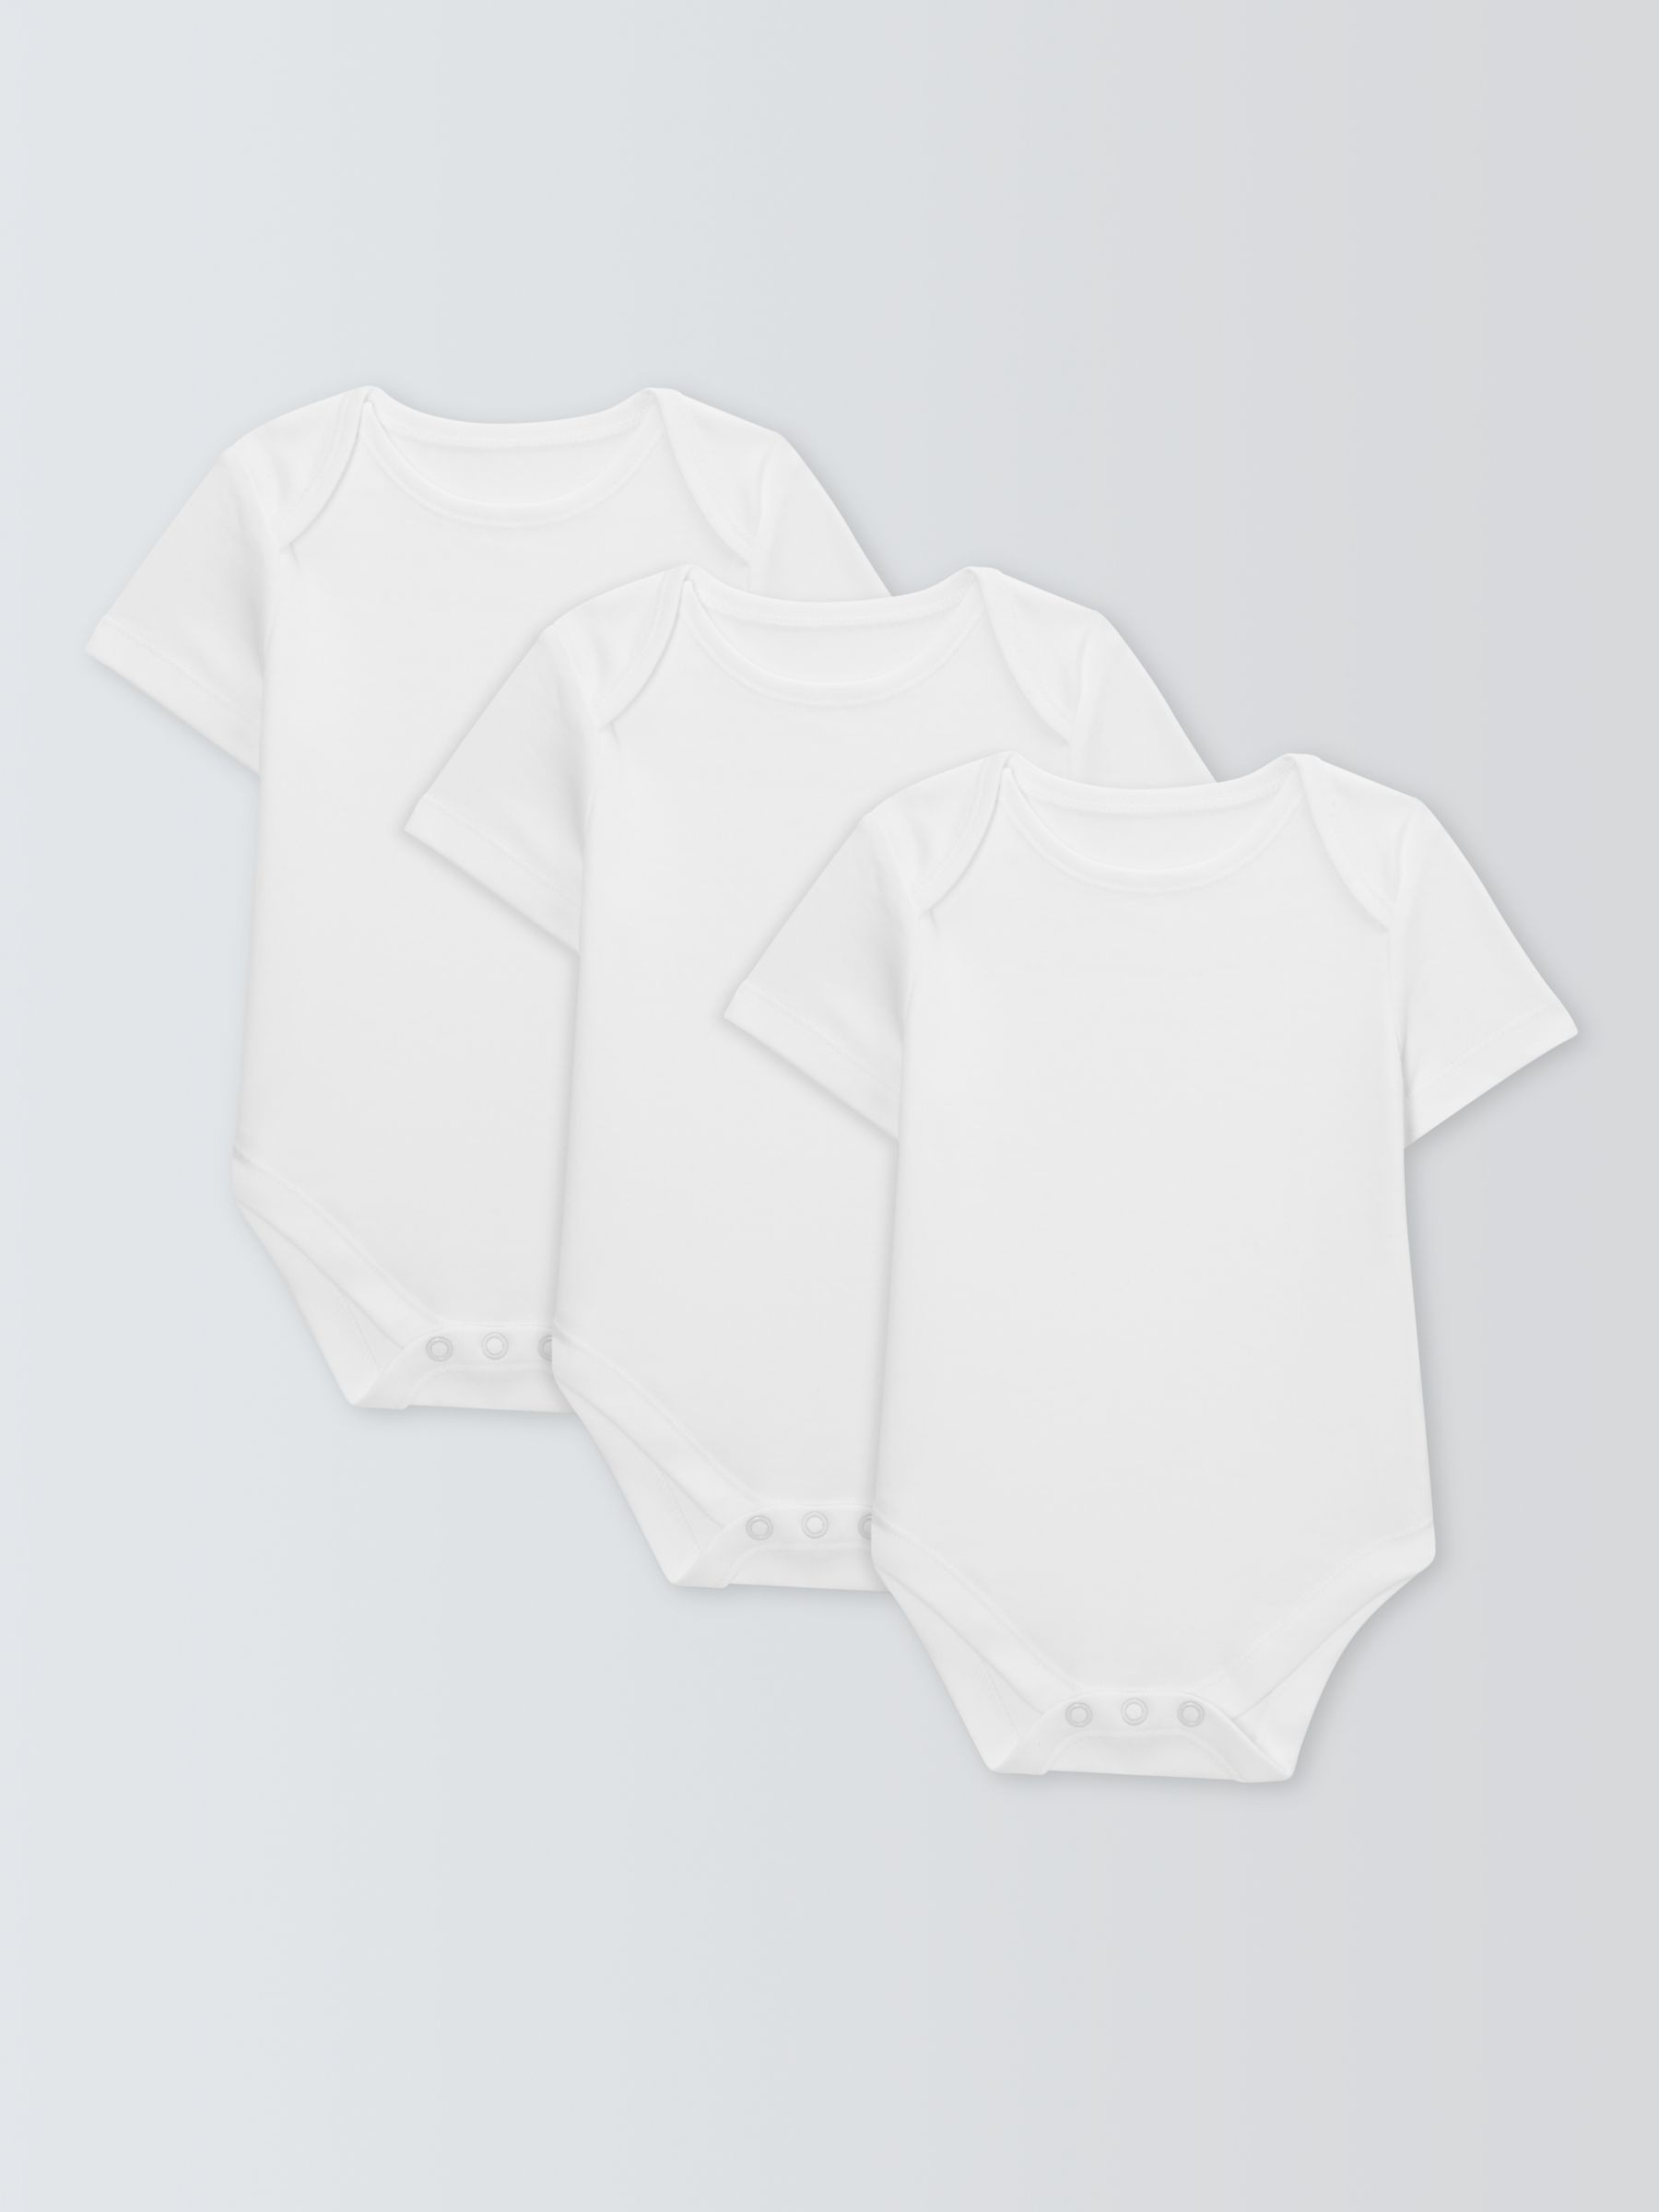 John Lewis Baby Pima Cotton Short Sleeve Bodysuit, Pack of 3, White, 9-12 months